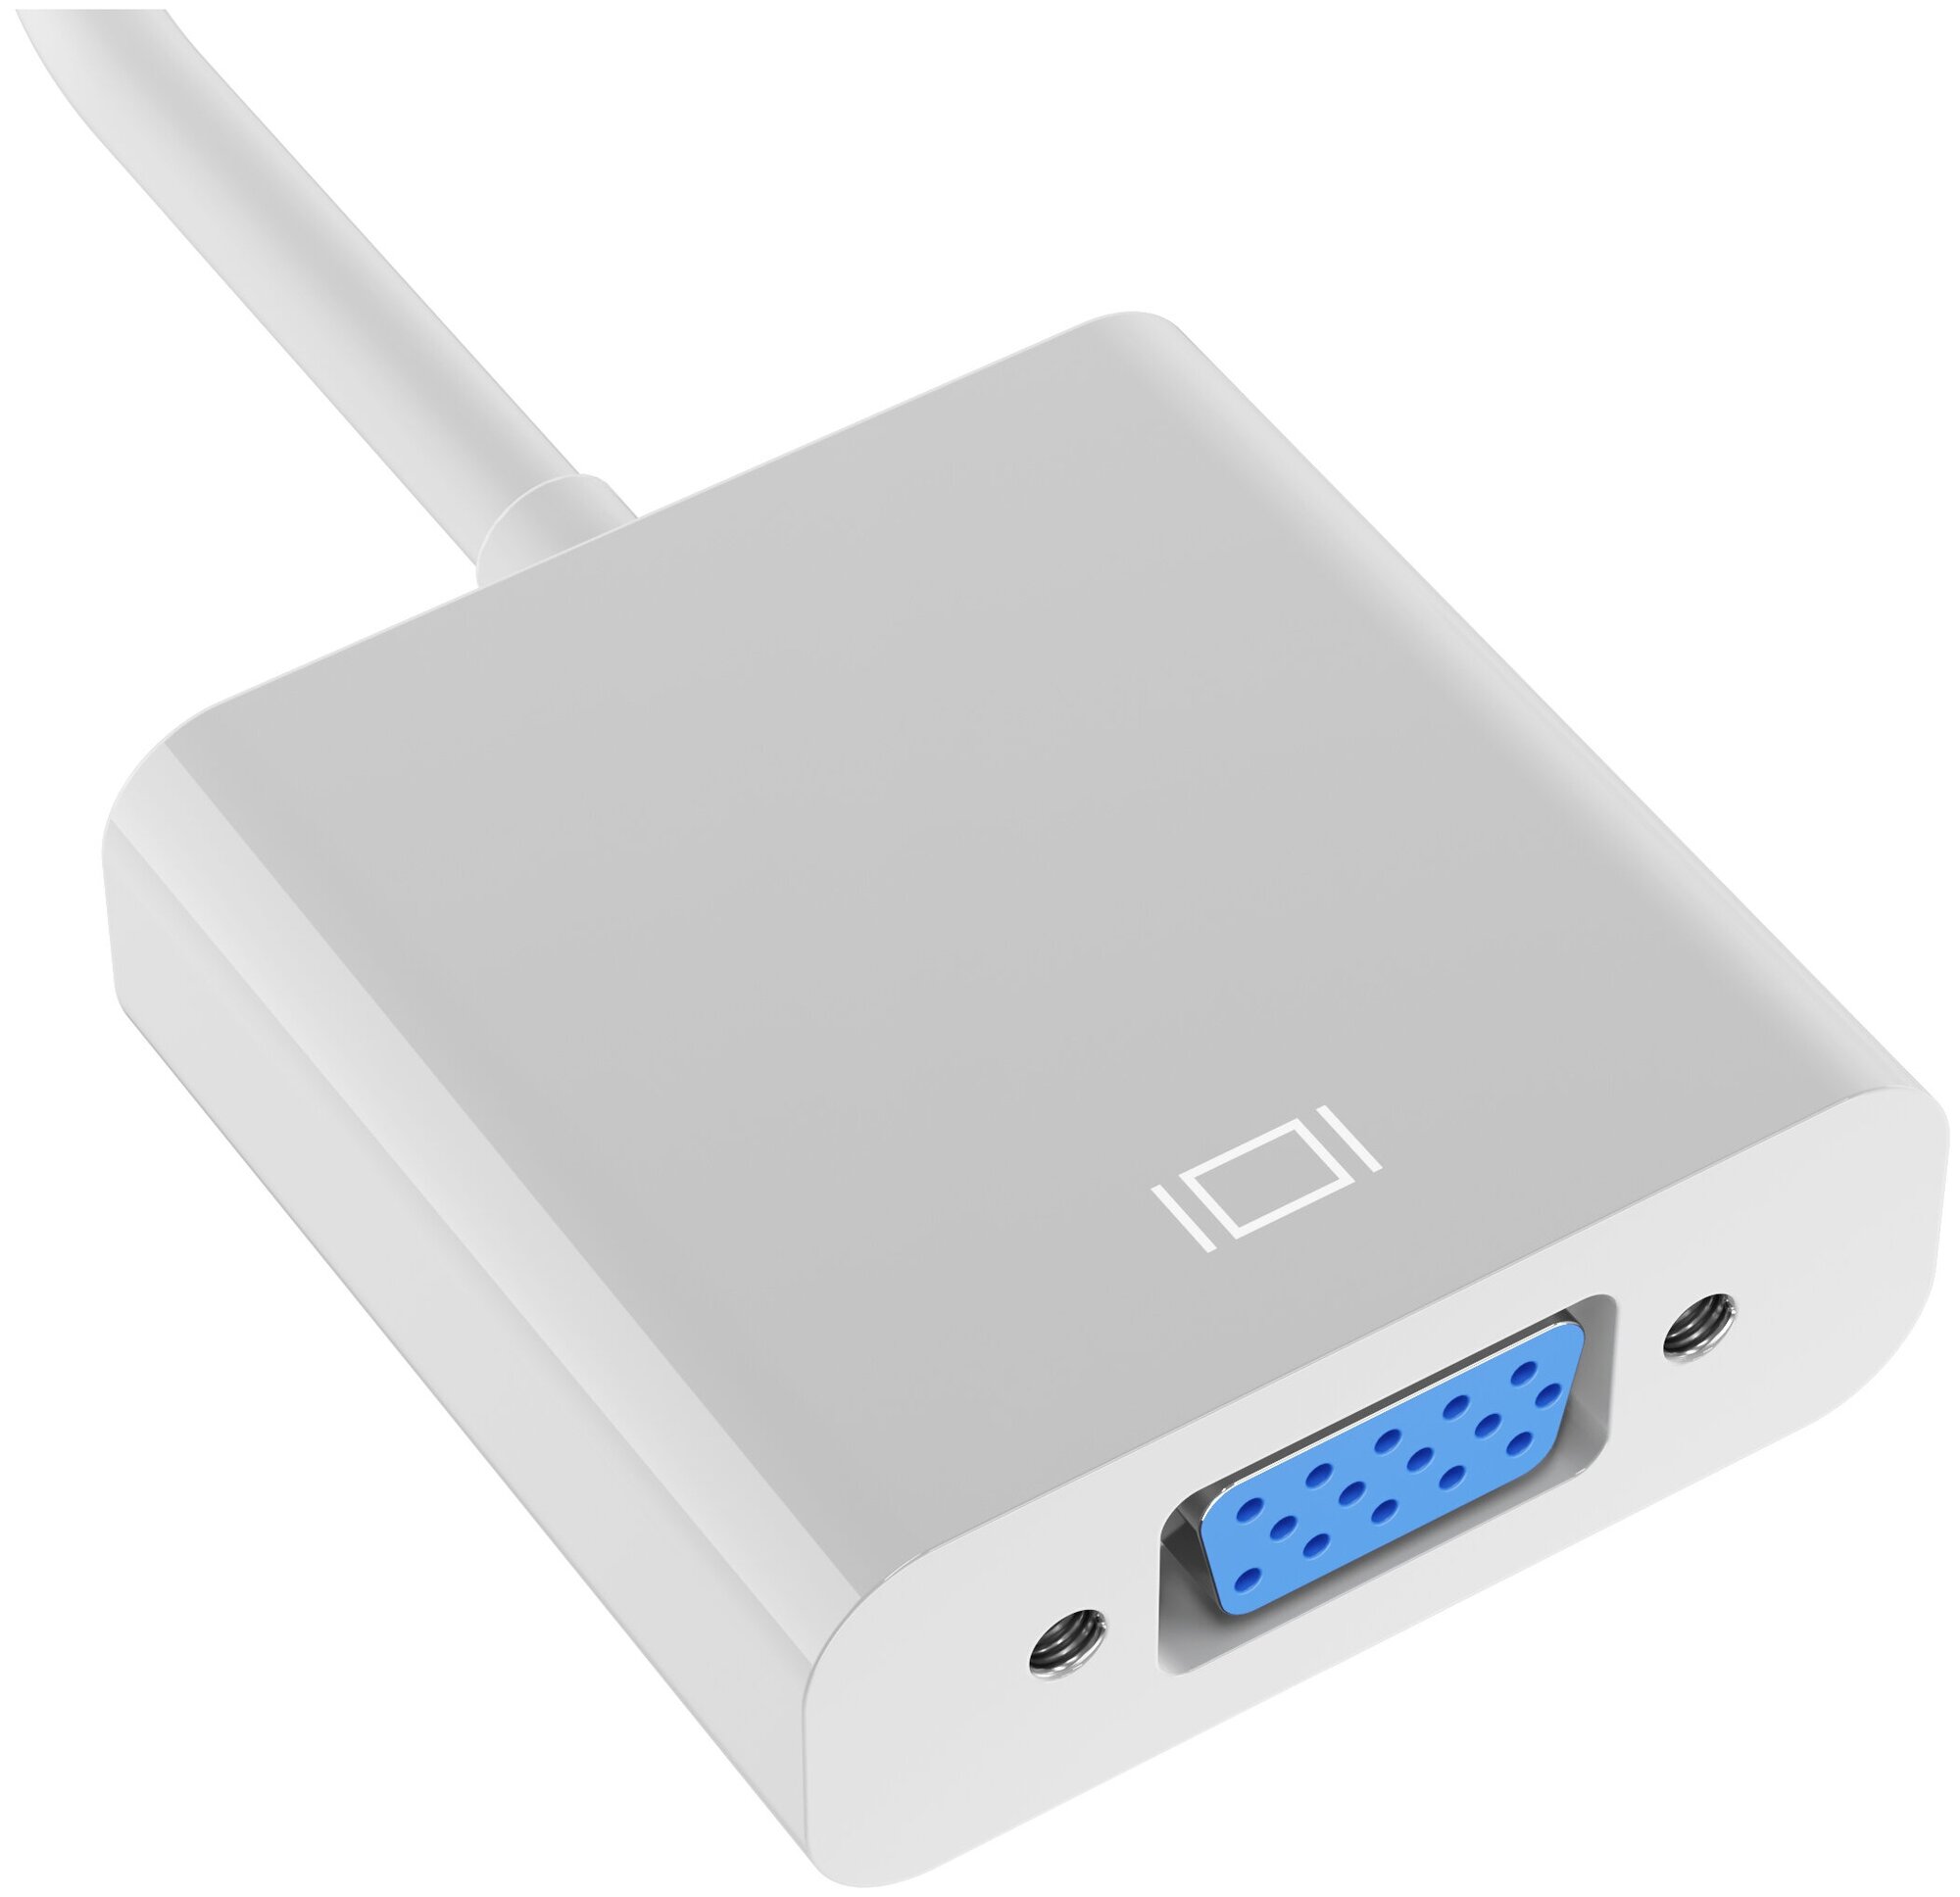 Переходник адаптер GSMIN B5 HDMI (M) - VGA (F) конвертер для монитора видеокарты проектора (Белый)